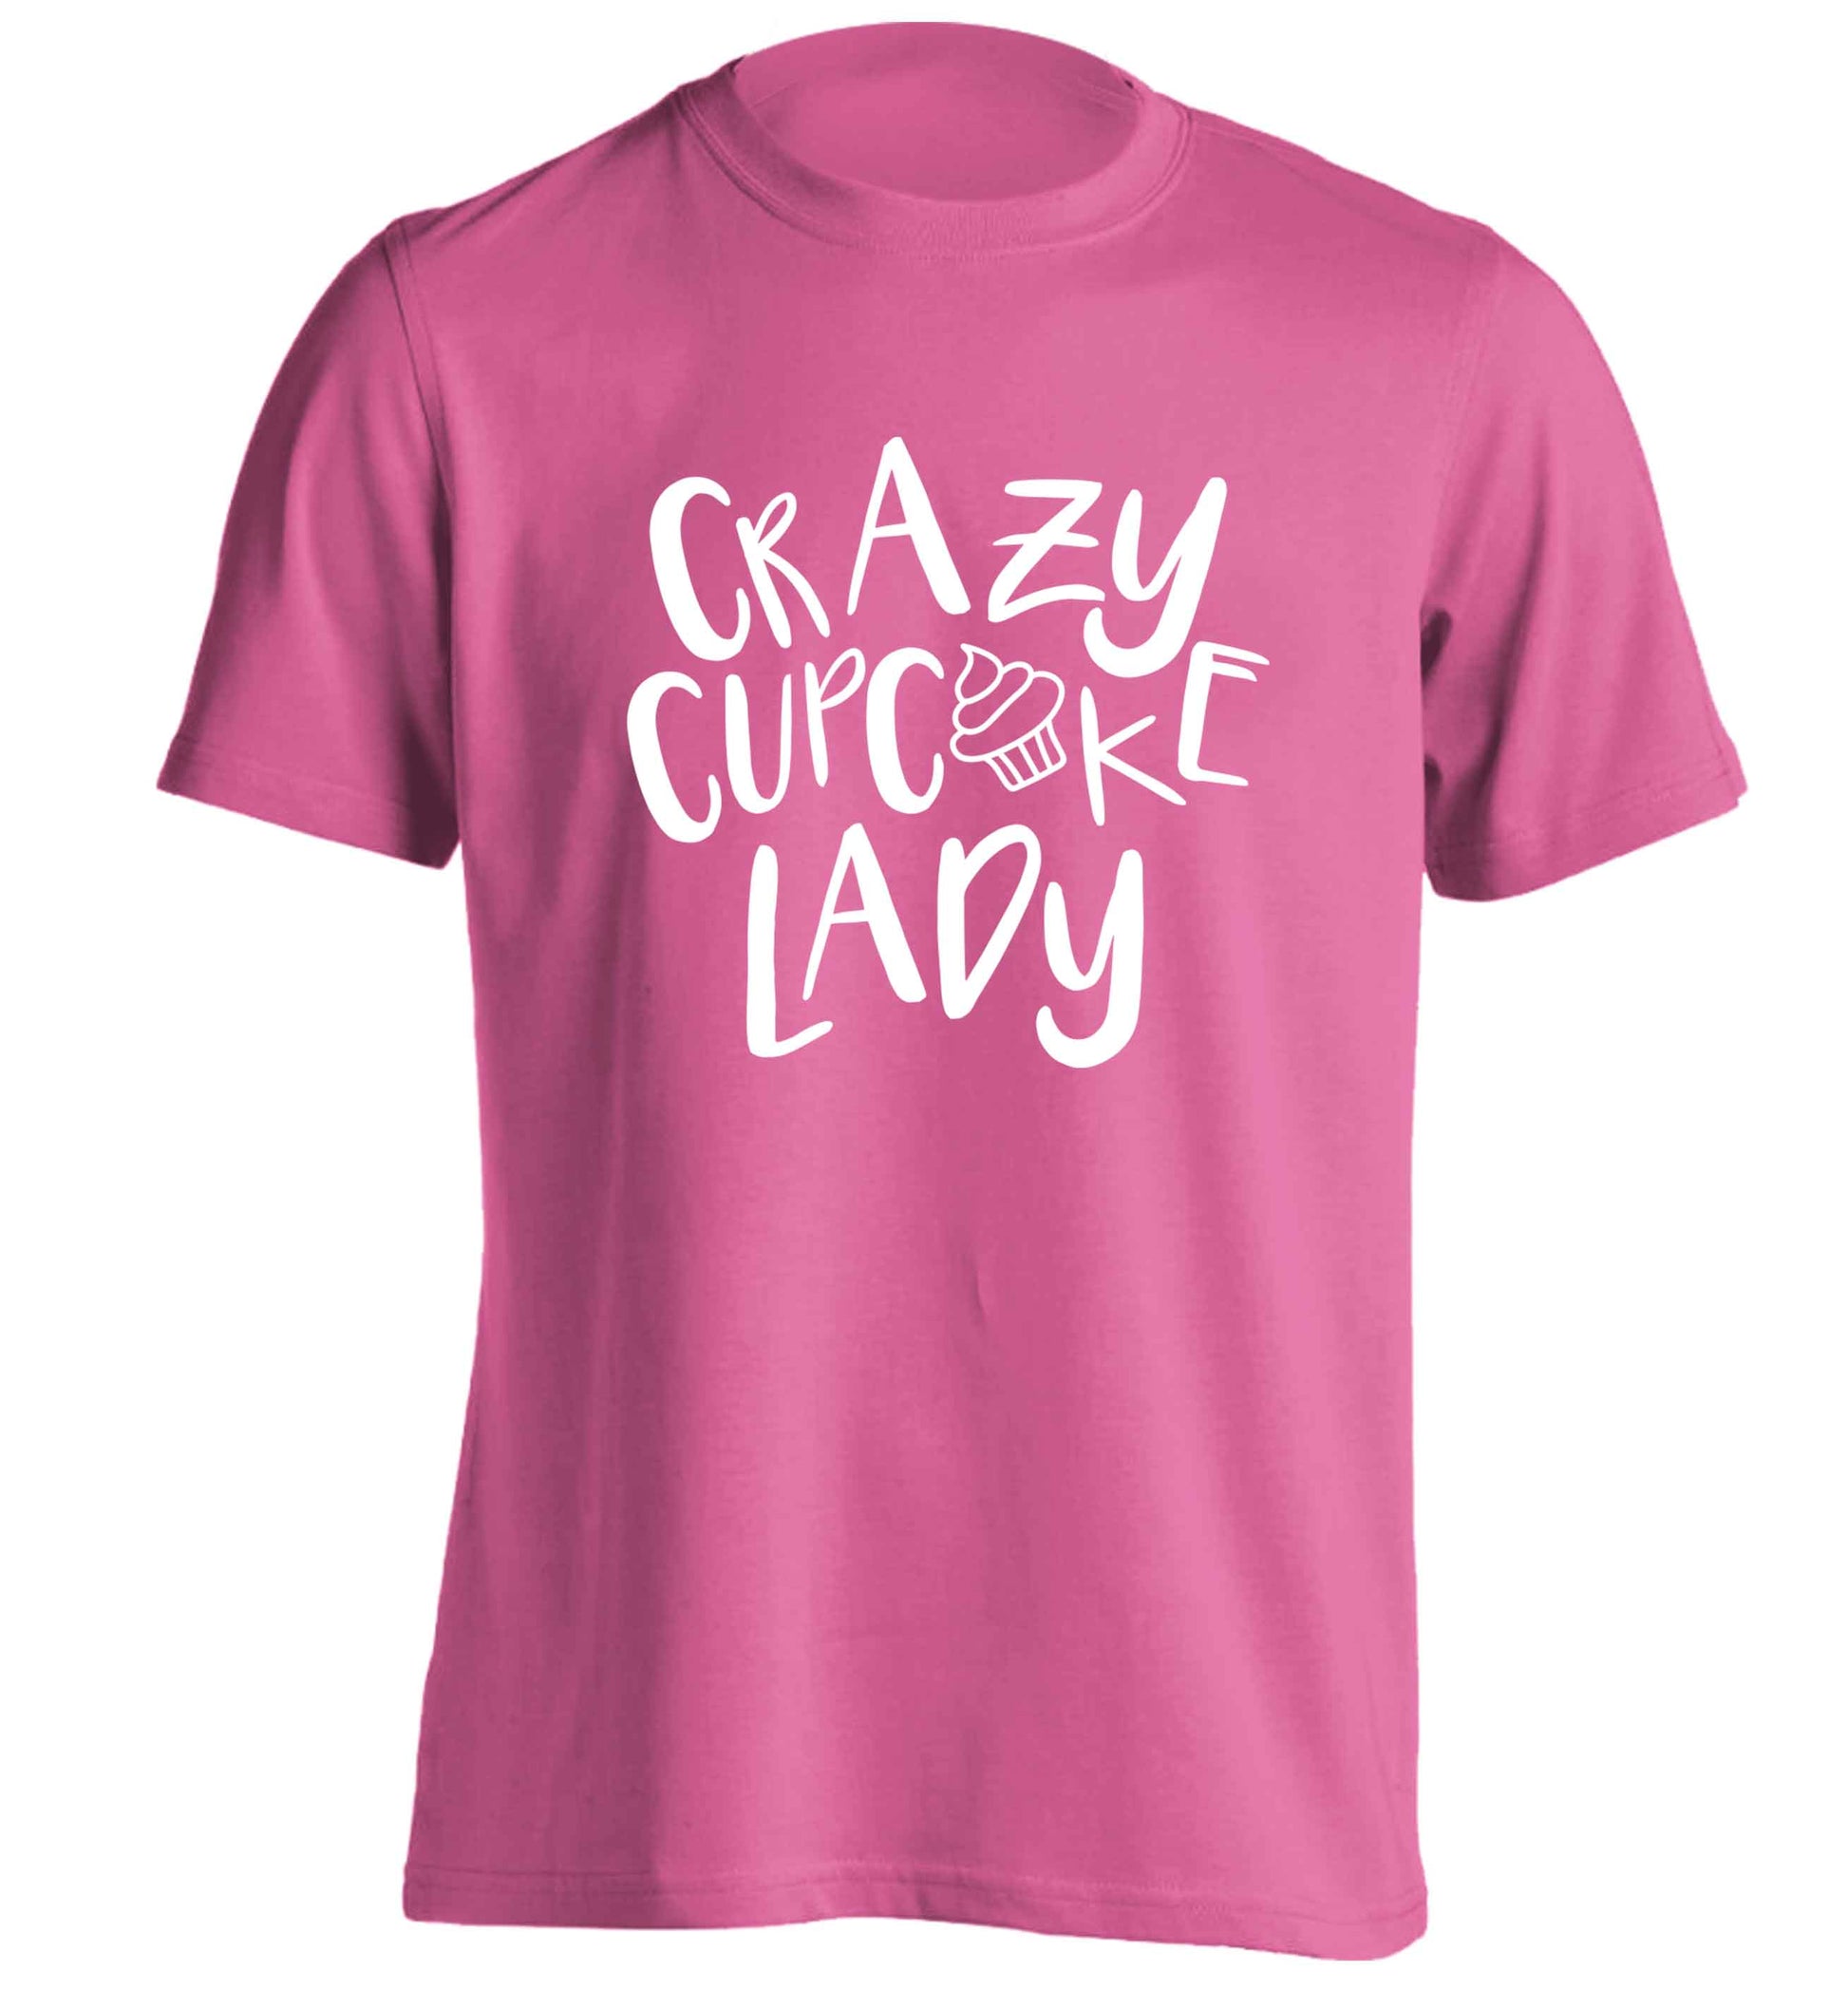 Crazy cupcake lady adults unisex pink Tshirt 2XL